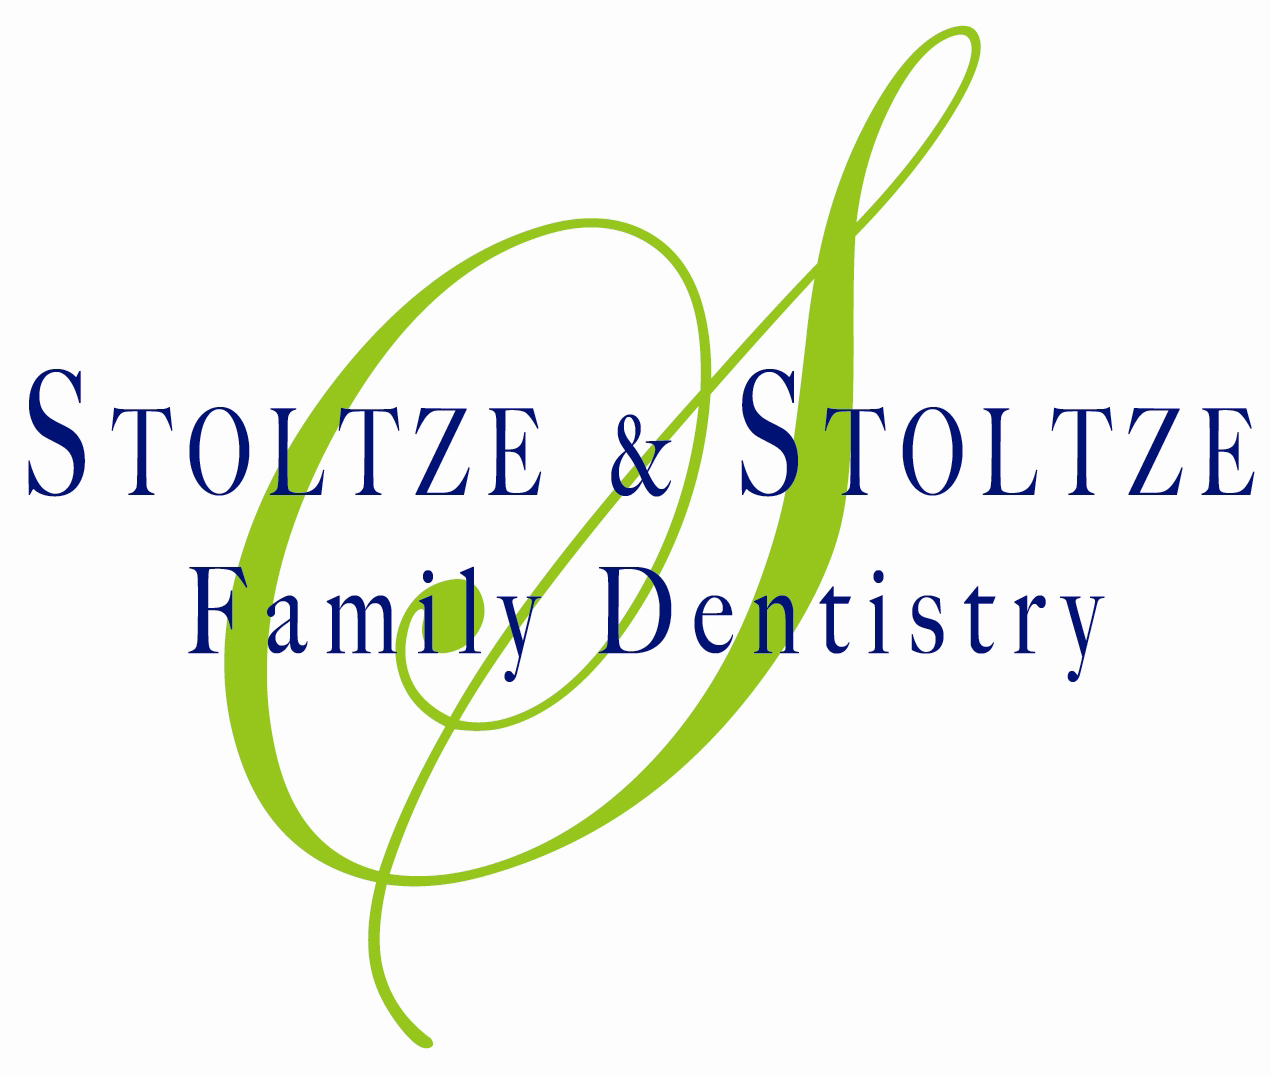 Stoltze & Stoltze Family Dentistry